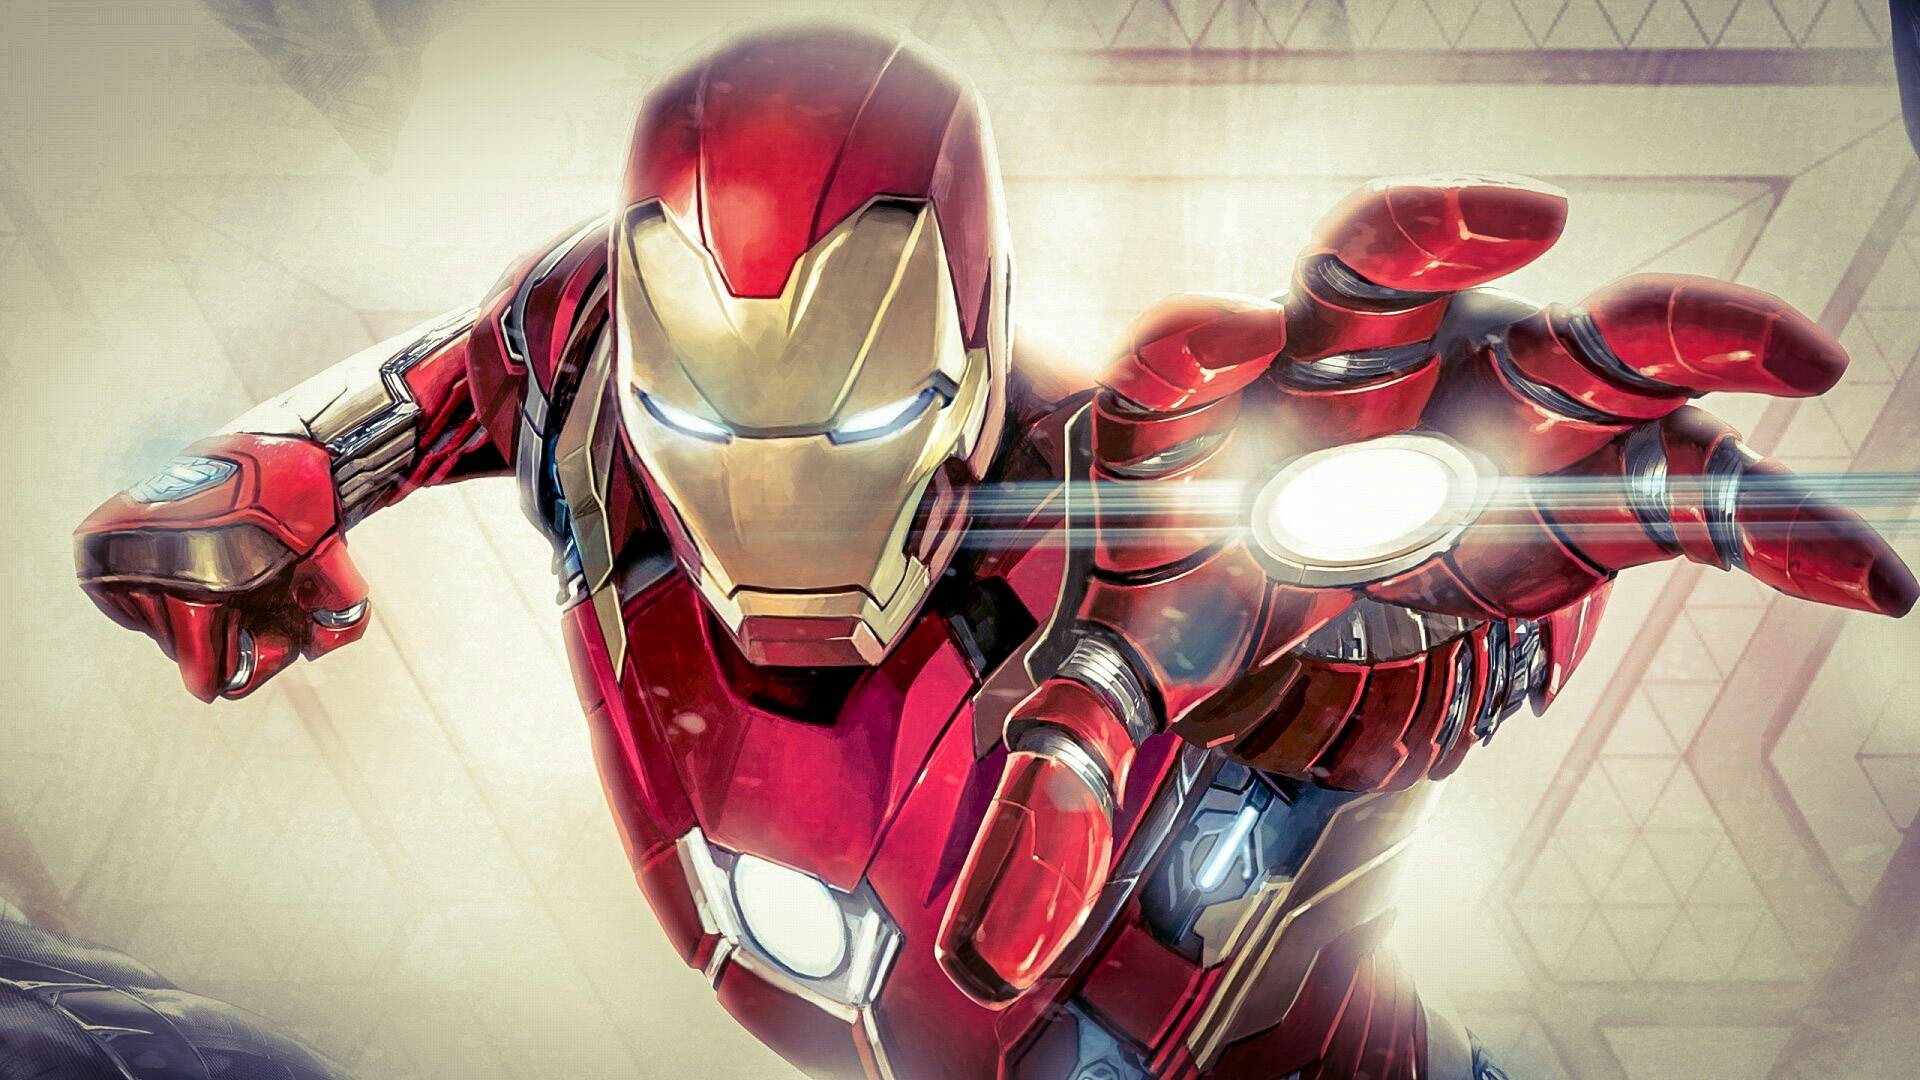 Iron Man Mark XLVI in Captain America: Civil War Wallpaper. Wallpaper Download. High Resolution Wallpaper